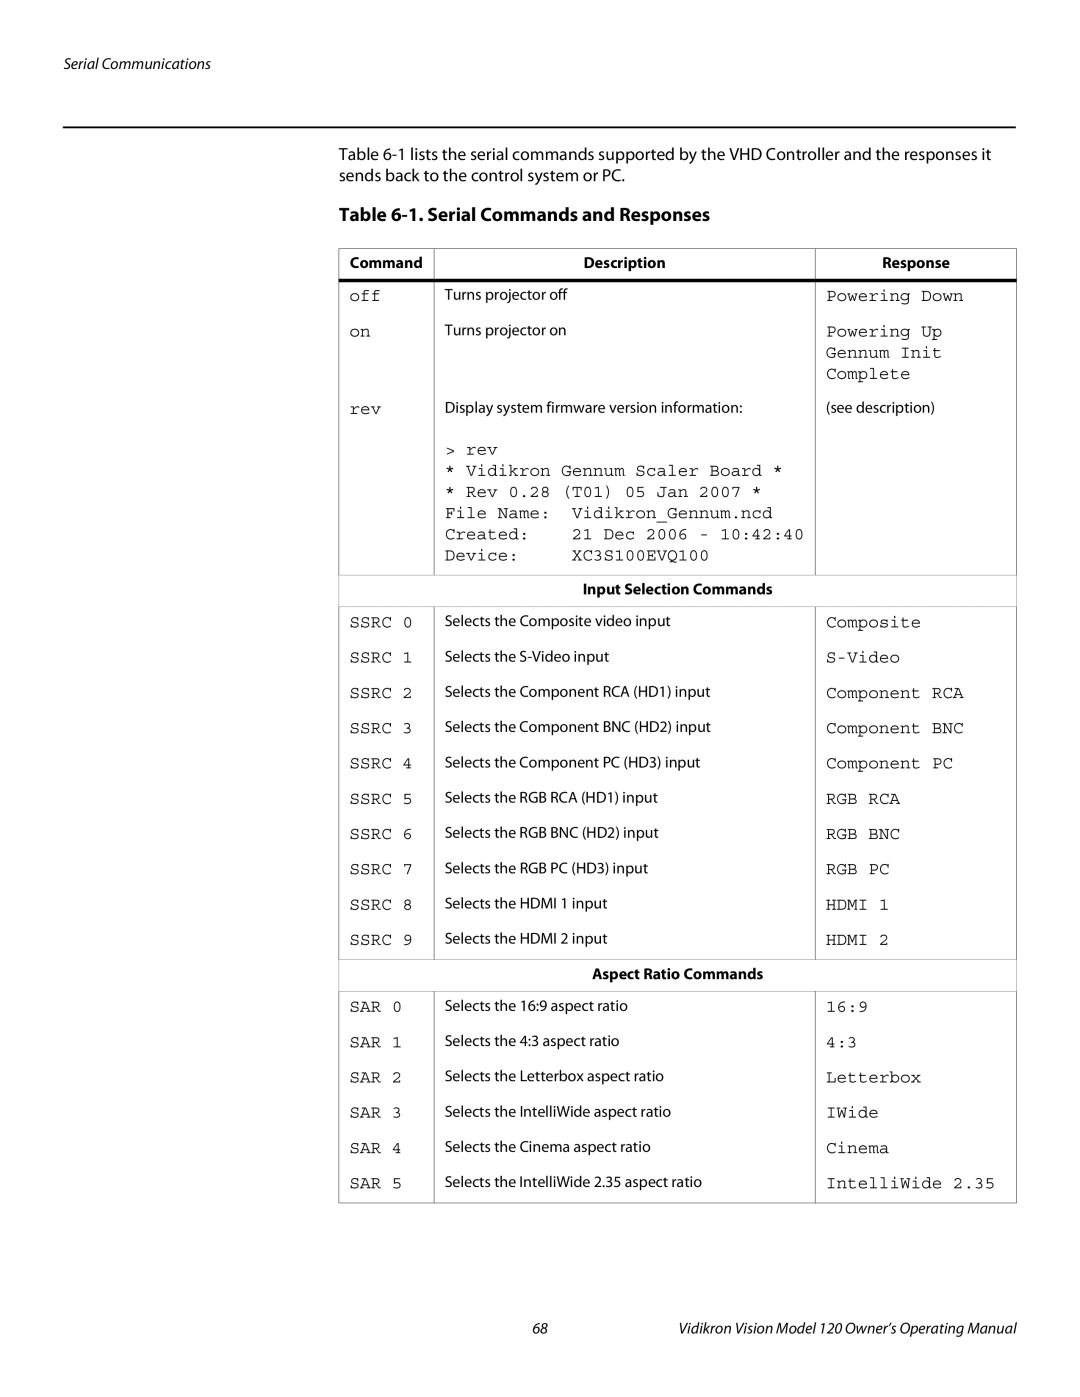 Vidikron v120 Serial Commands and Responses, Command Description Response, Input Selection Commands, Aspect Ratio Commands 